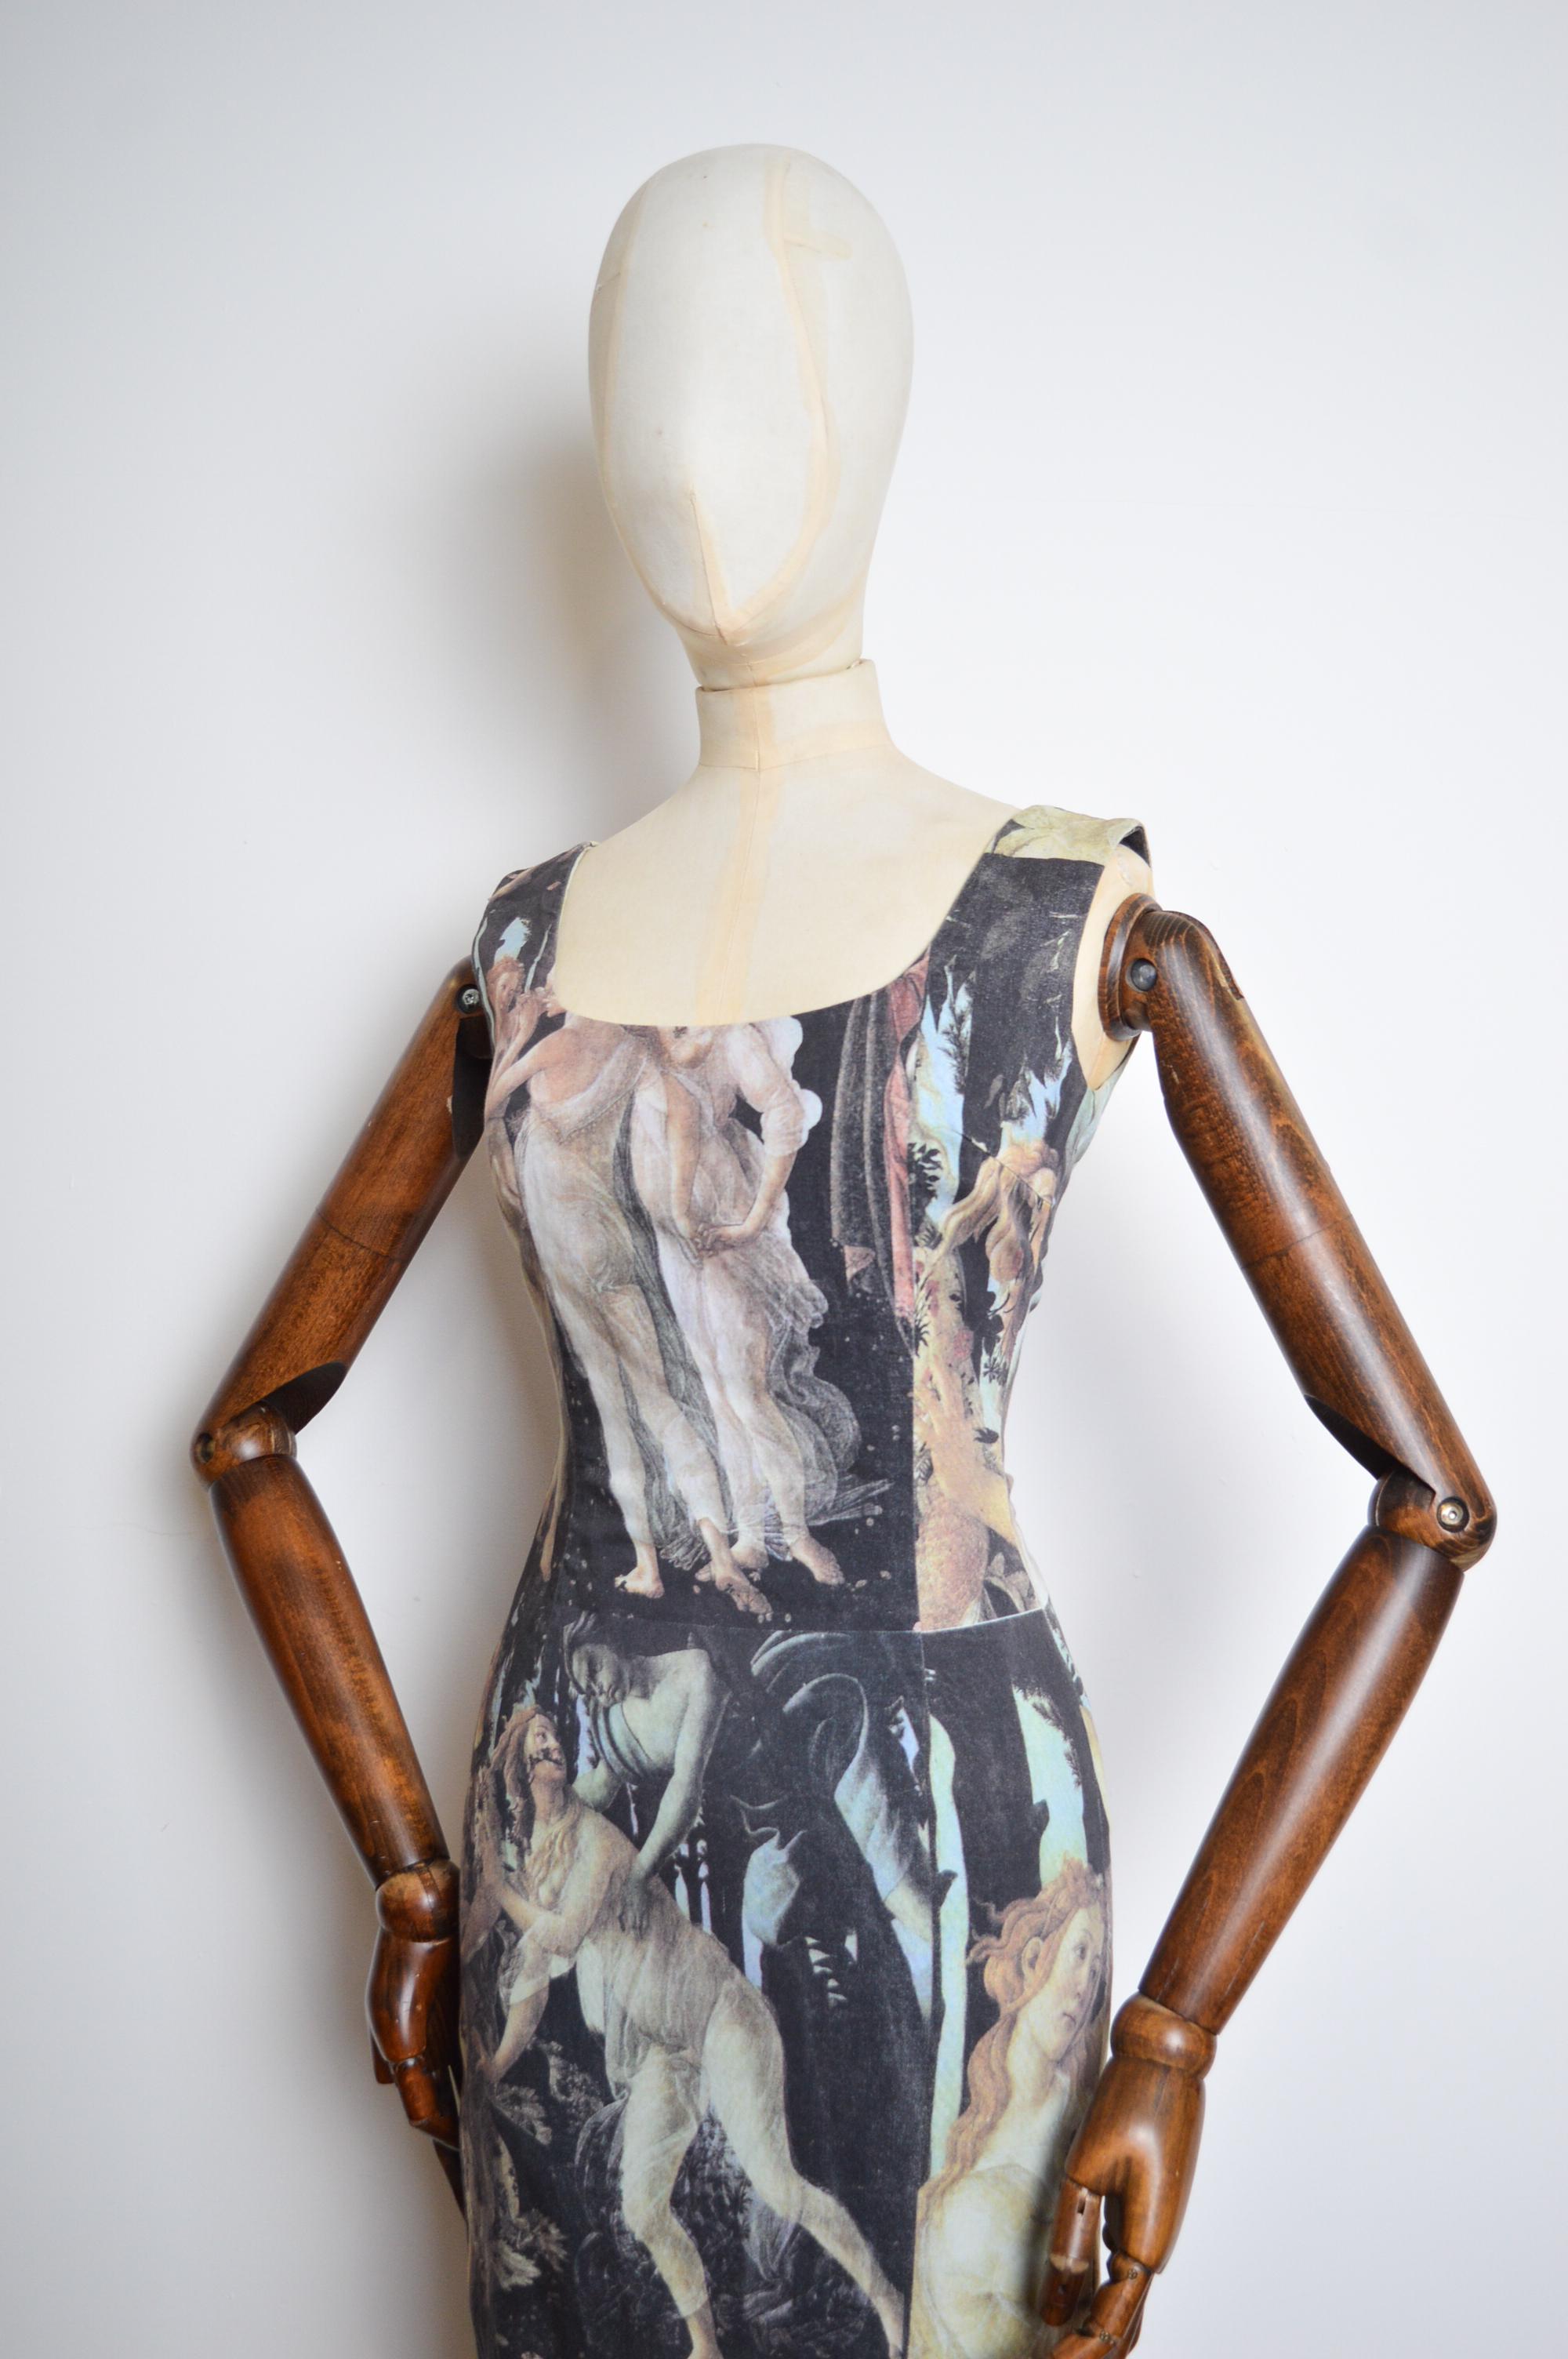 SS 1993 DOLCE & GABBANA Body con Botticelli Primavera Art Runway cocktail Dress For Sale 9